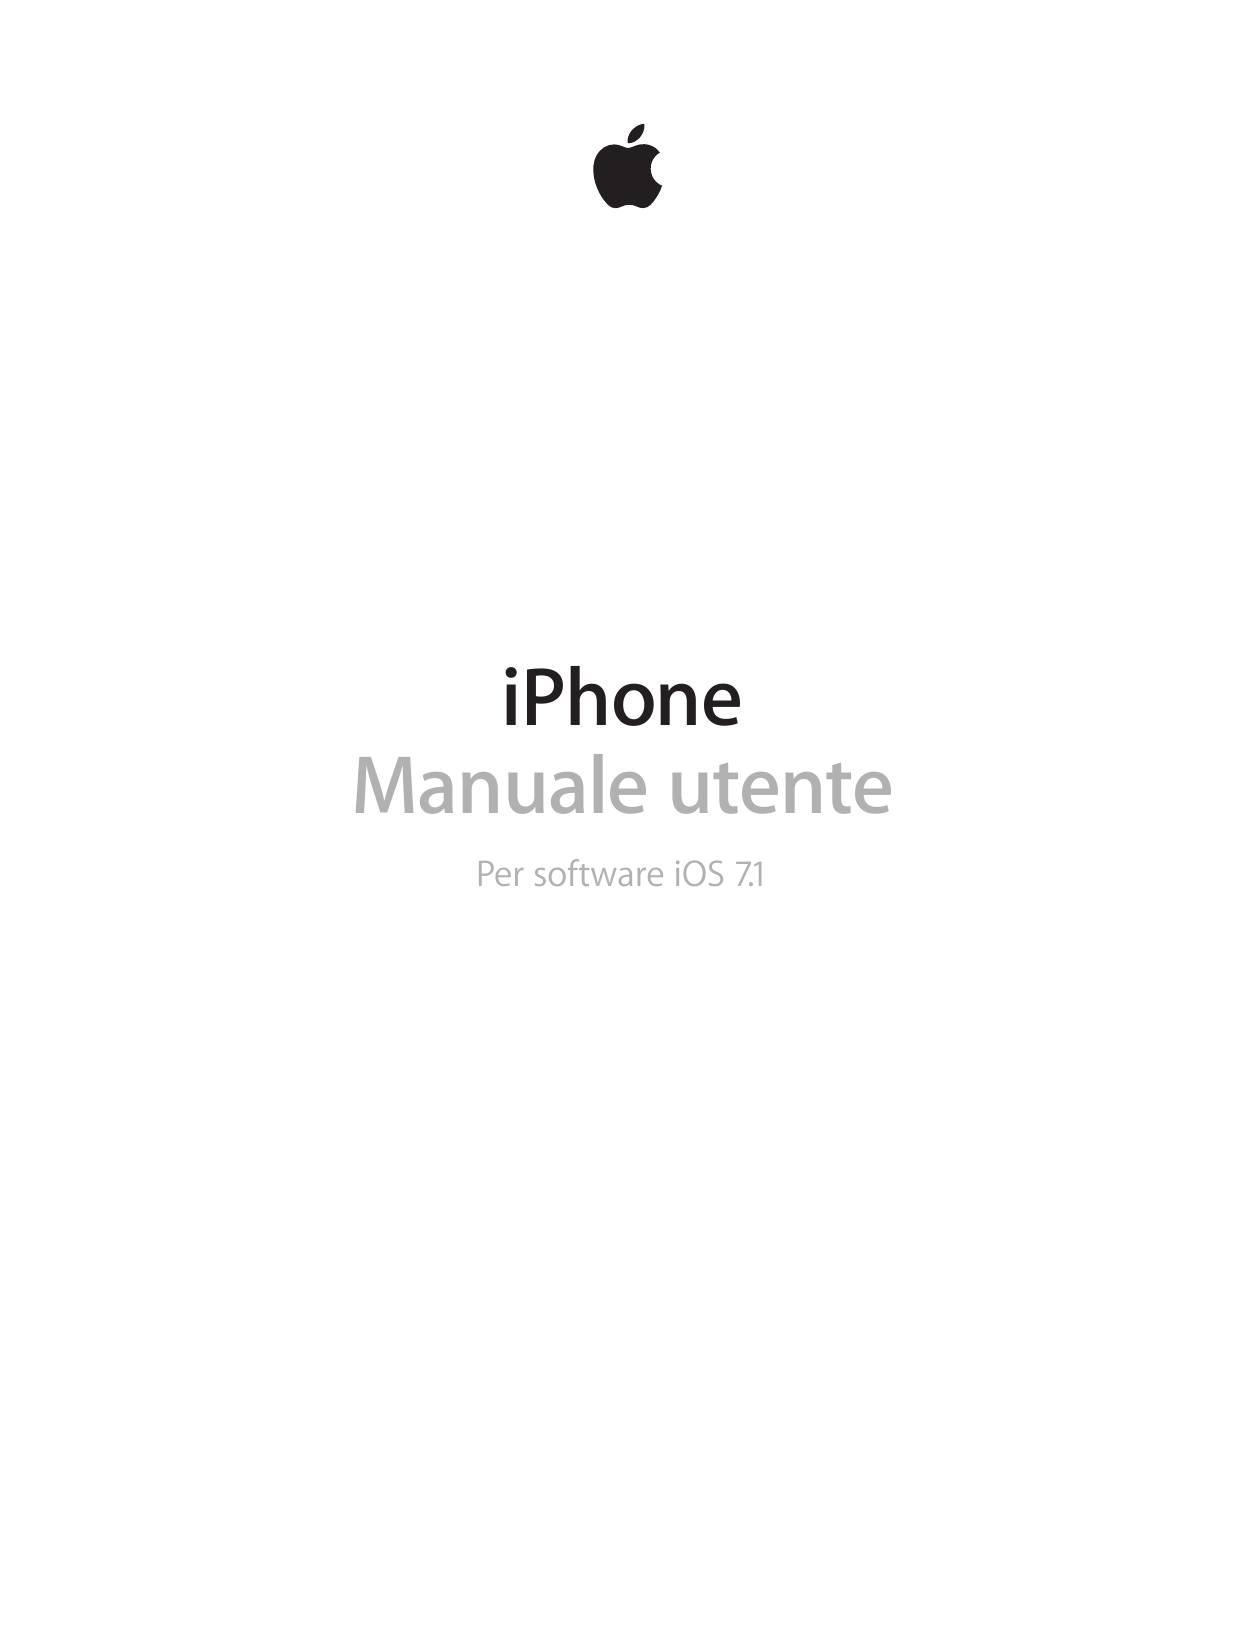 iPhoneManuale utentePer software iOS 7.1